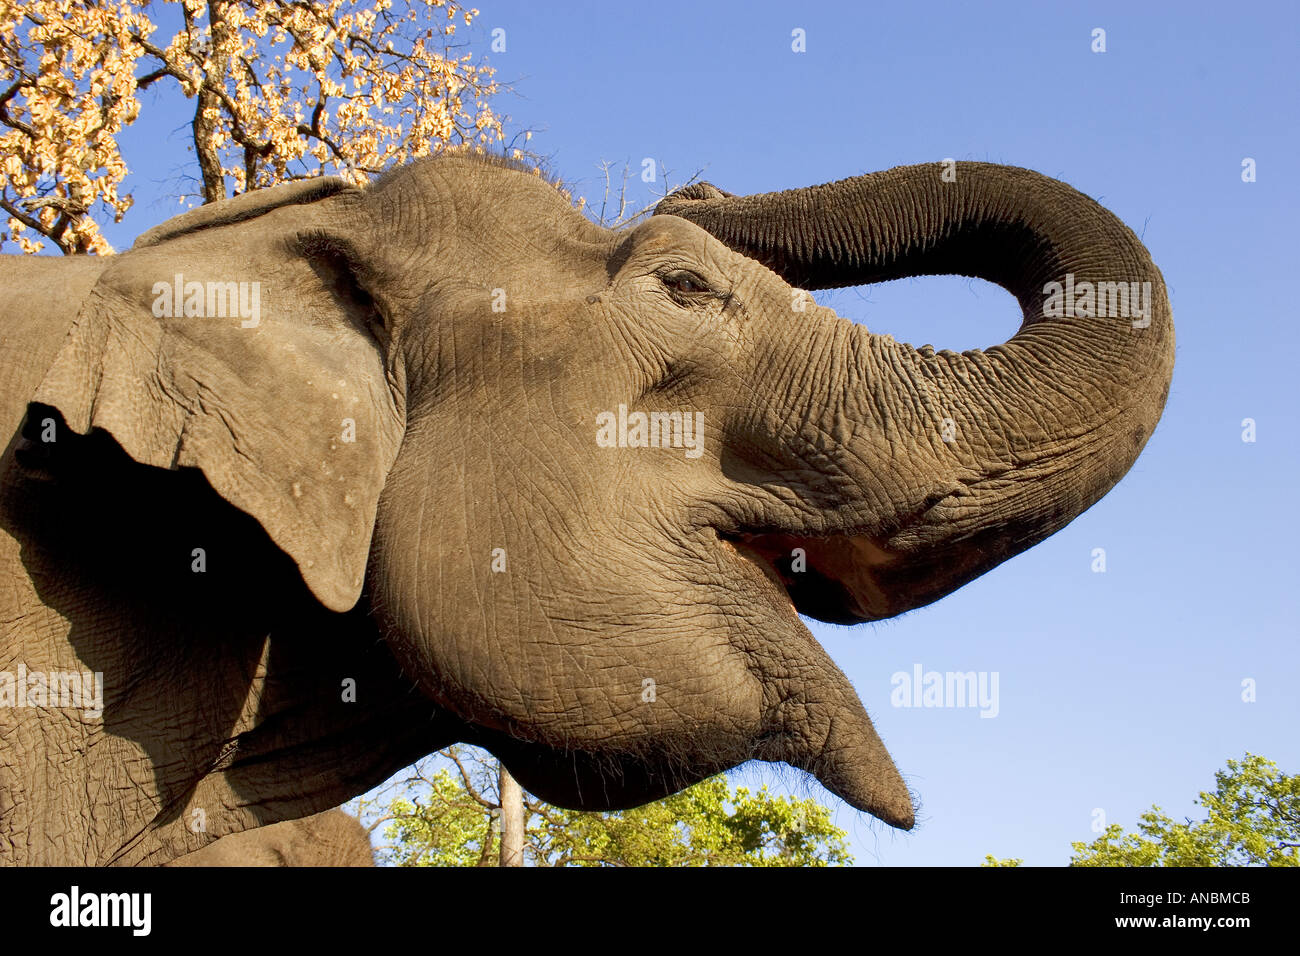 elephant trumpeting clipart - photo #43